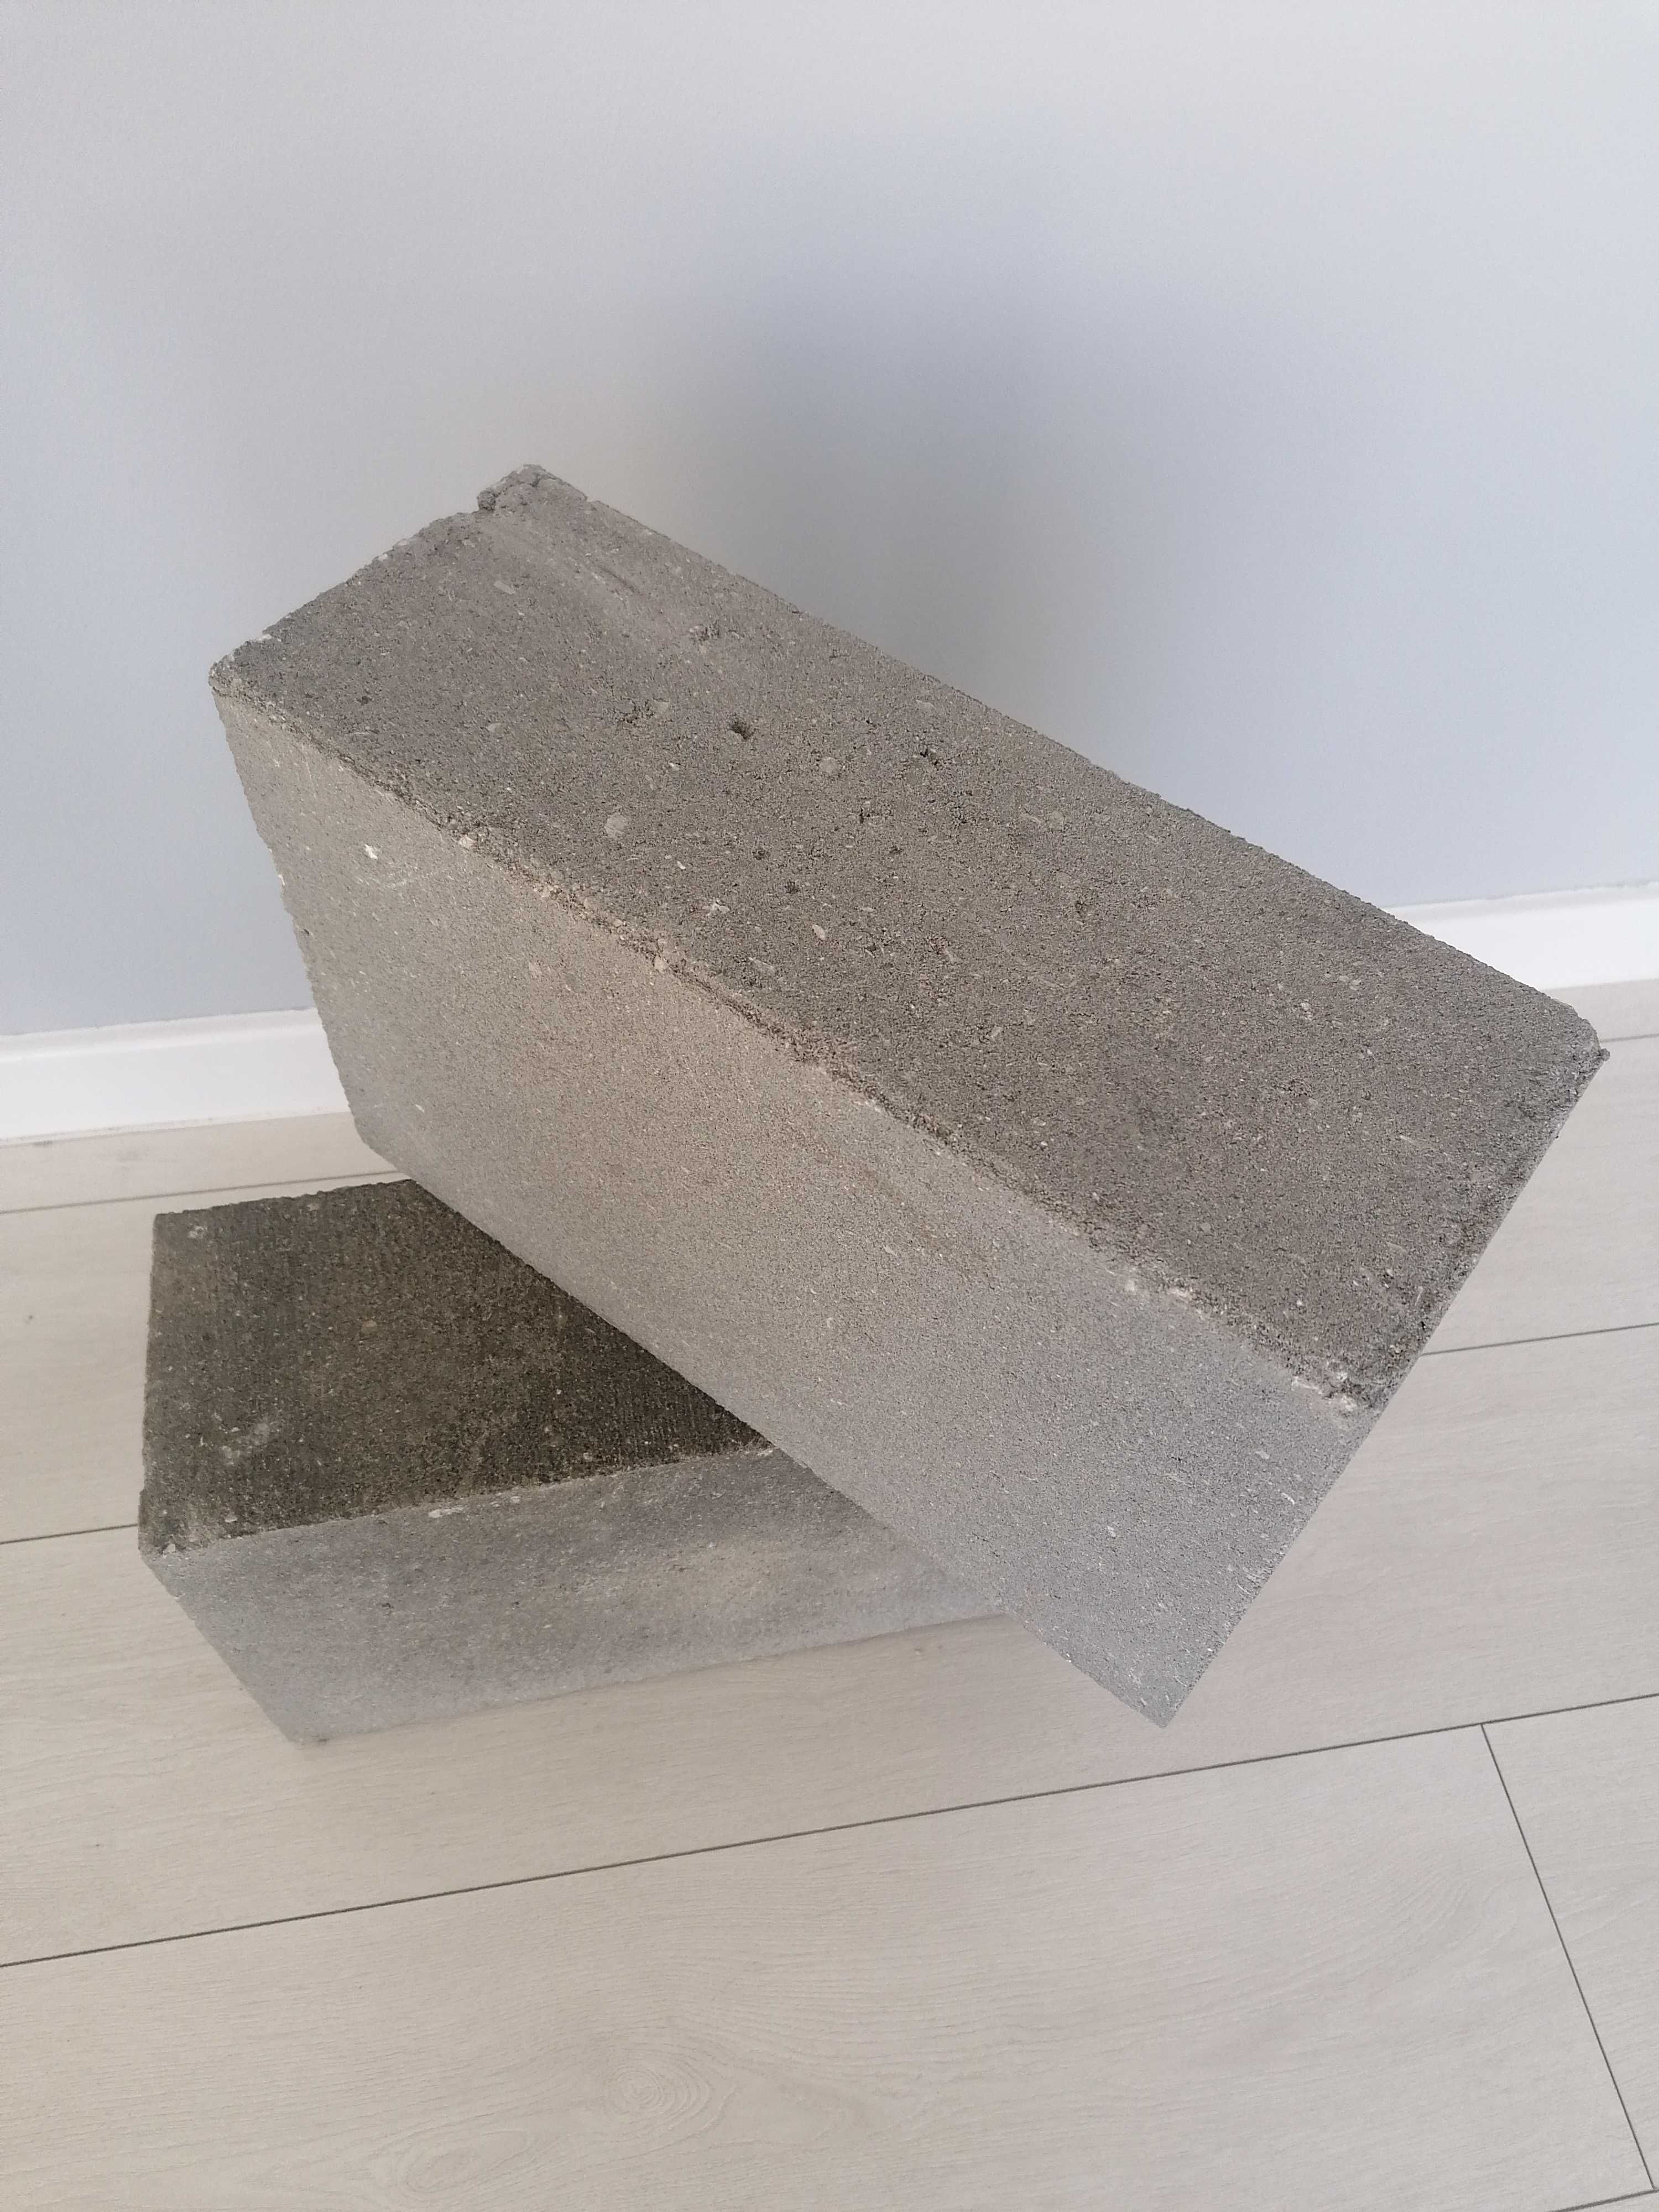 Bloczki fundamentowe betonowe B-15 Okazja Leca 24 cm